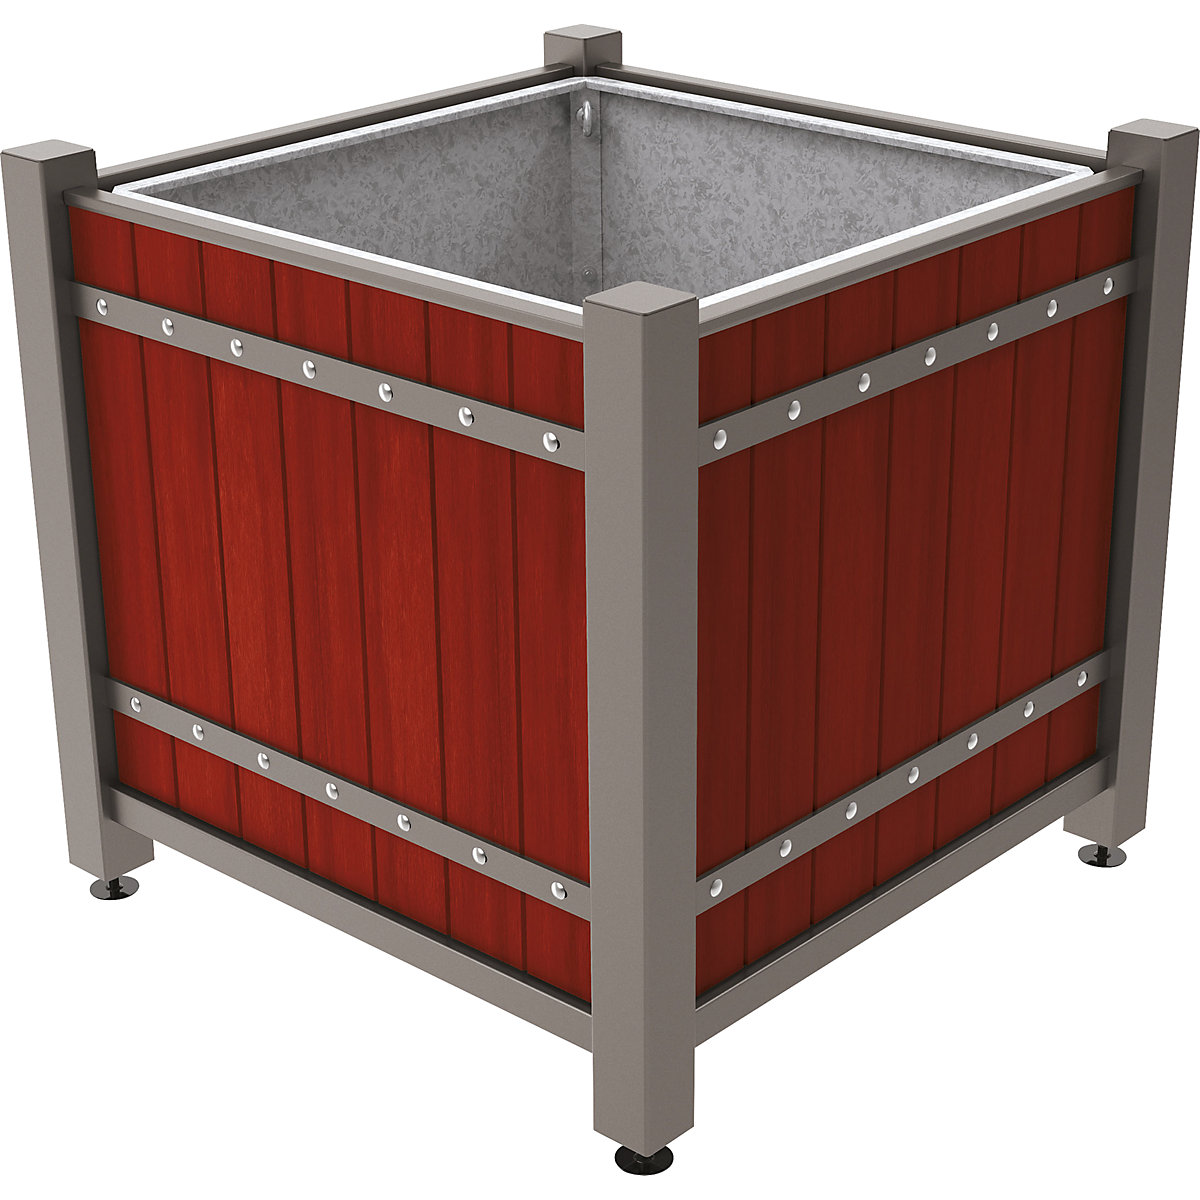 SARLAT plant container – PROCITY